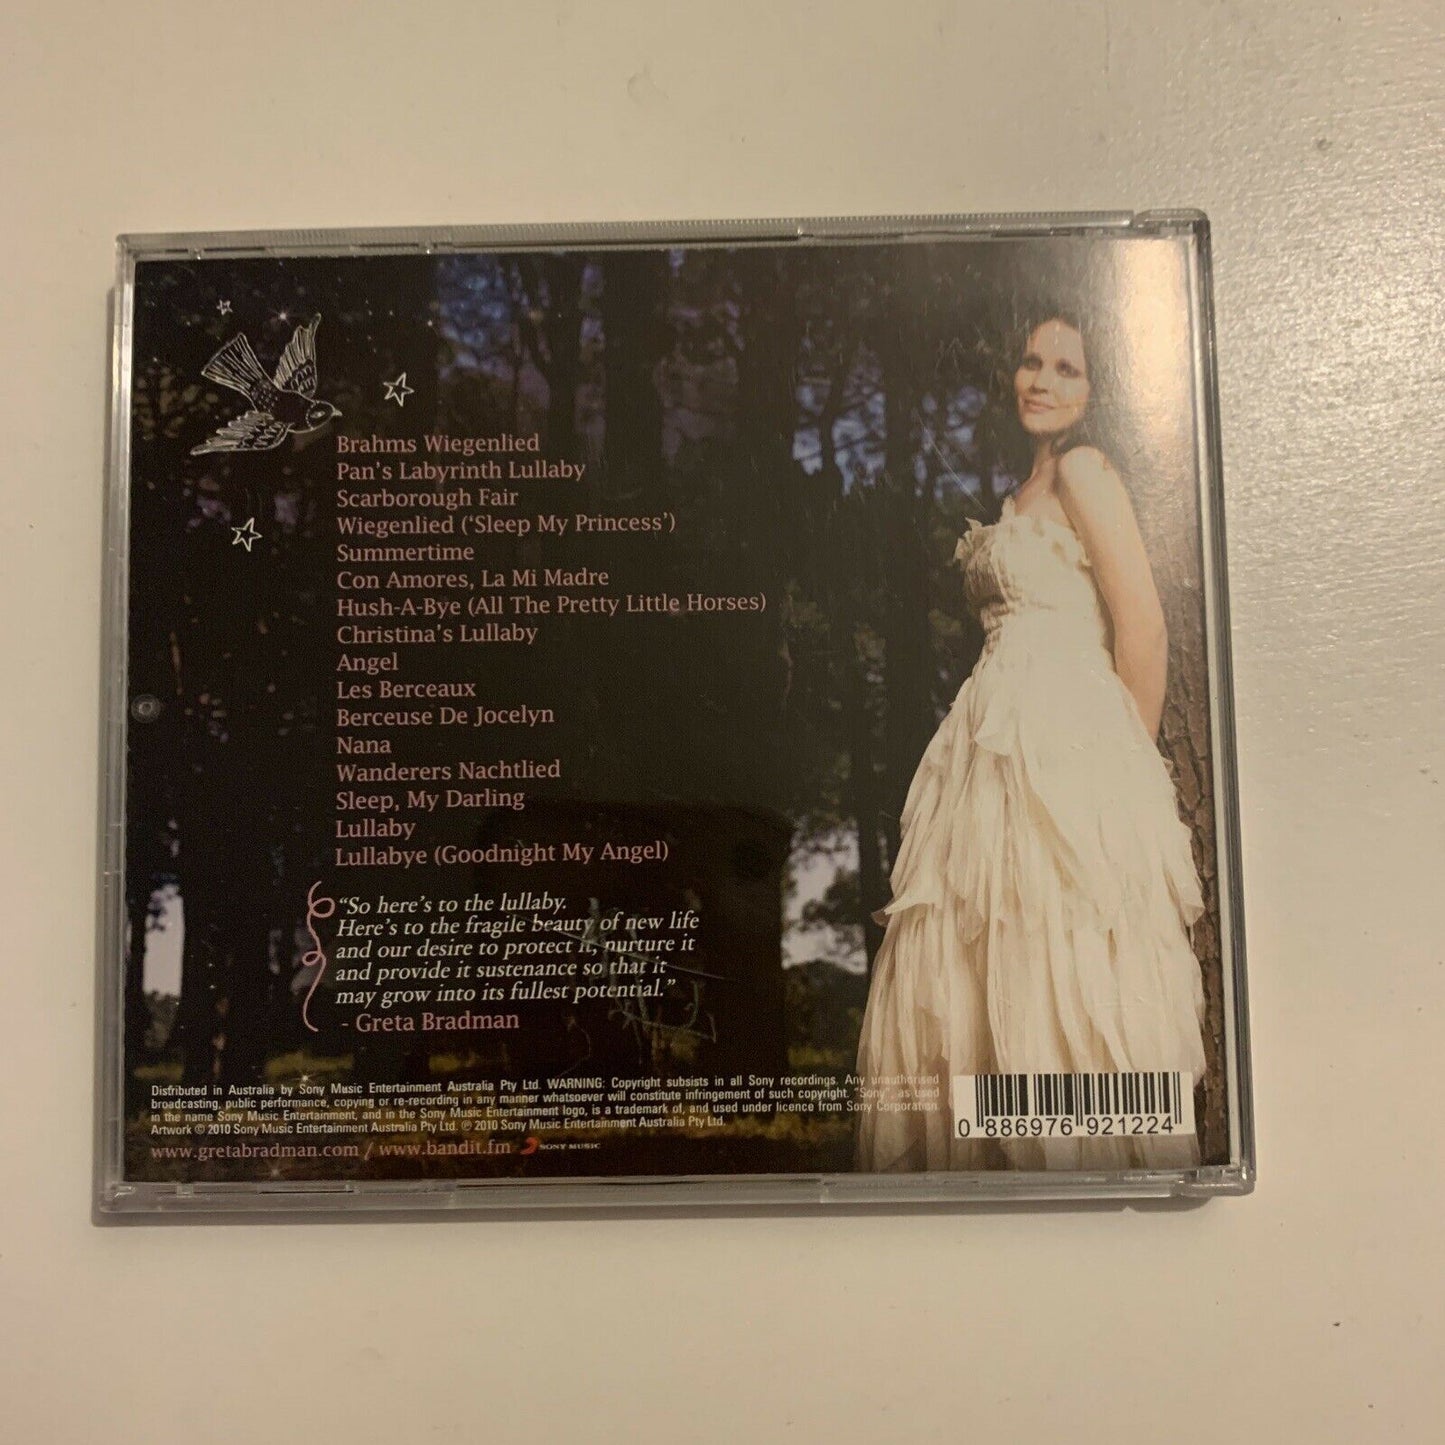 *Autographed Copy* Greta Bradman - Forest Of Dreams (CD, 2010)